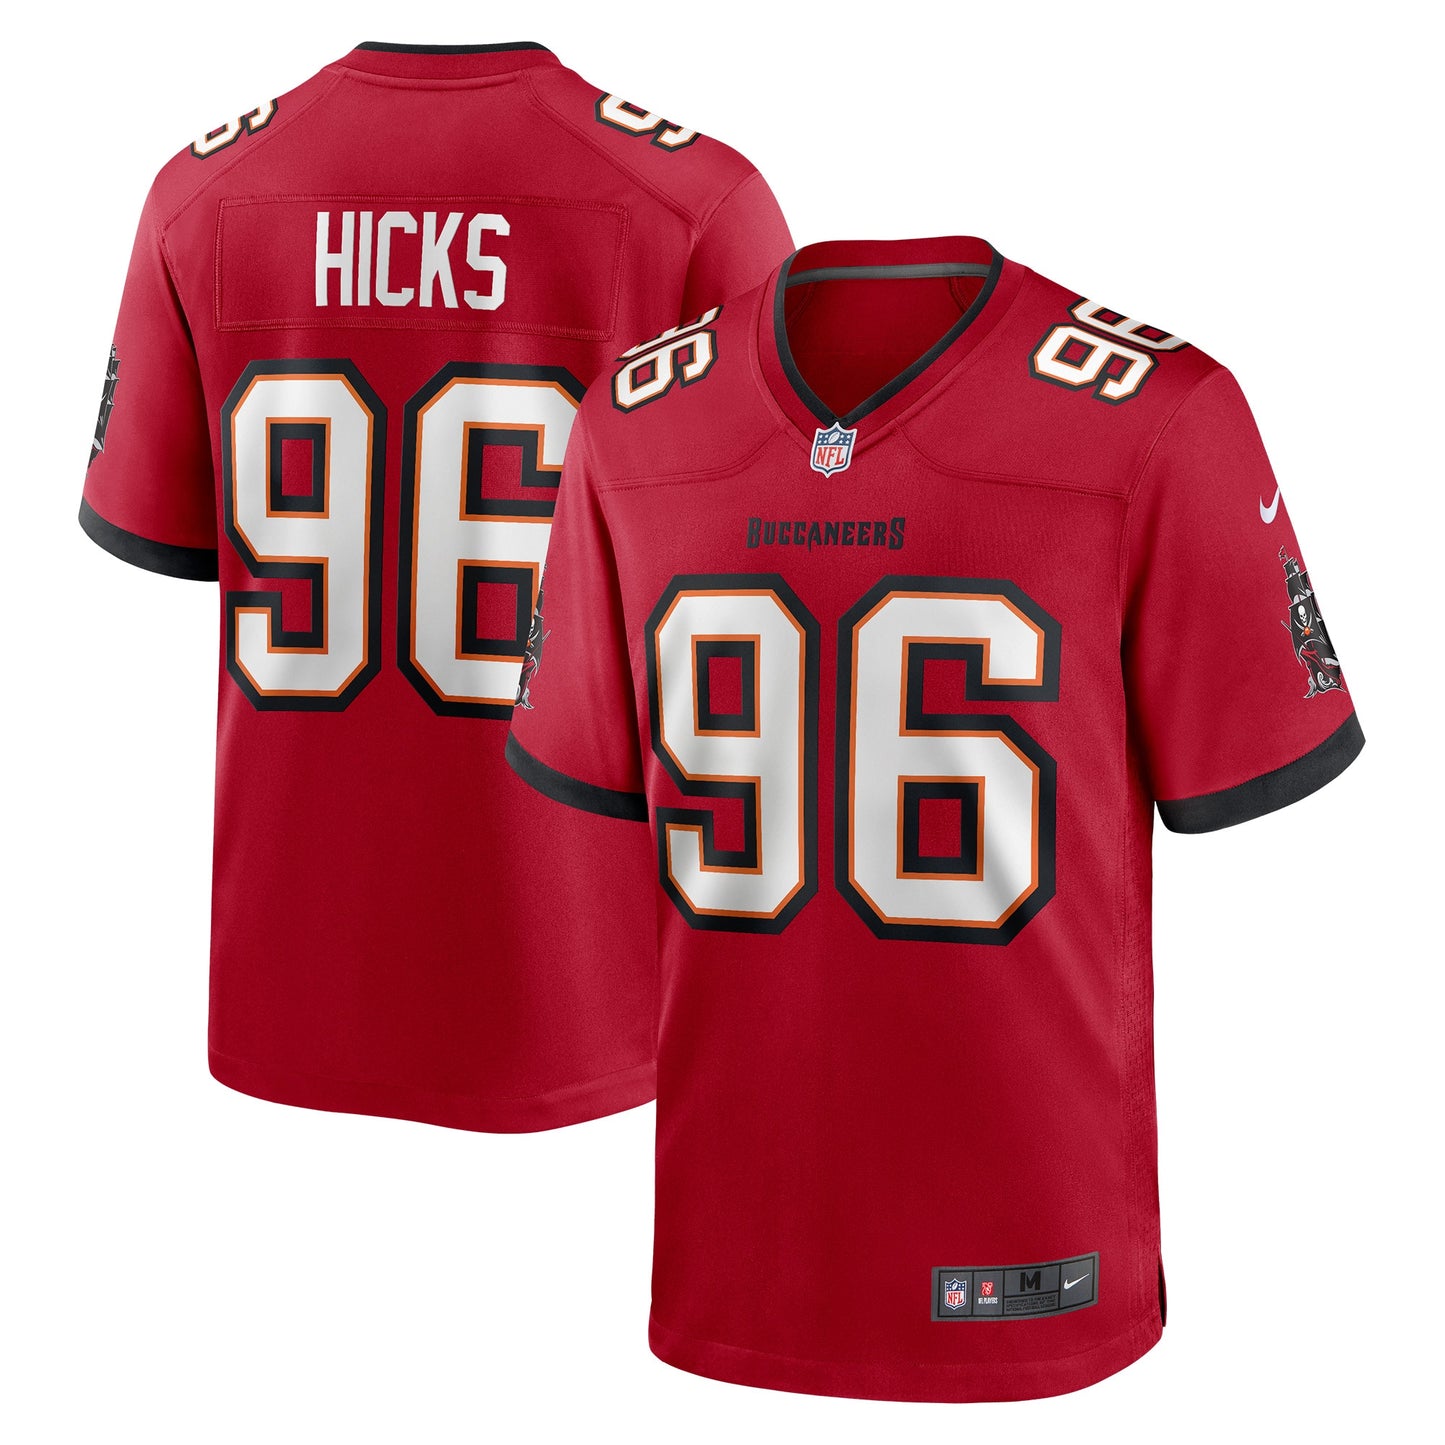 Akiem Hicks Tampa Bay Buccaneers Nike Game Player Jersey - Red